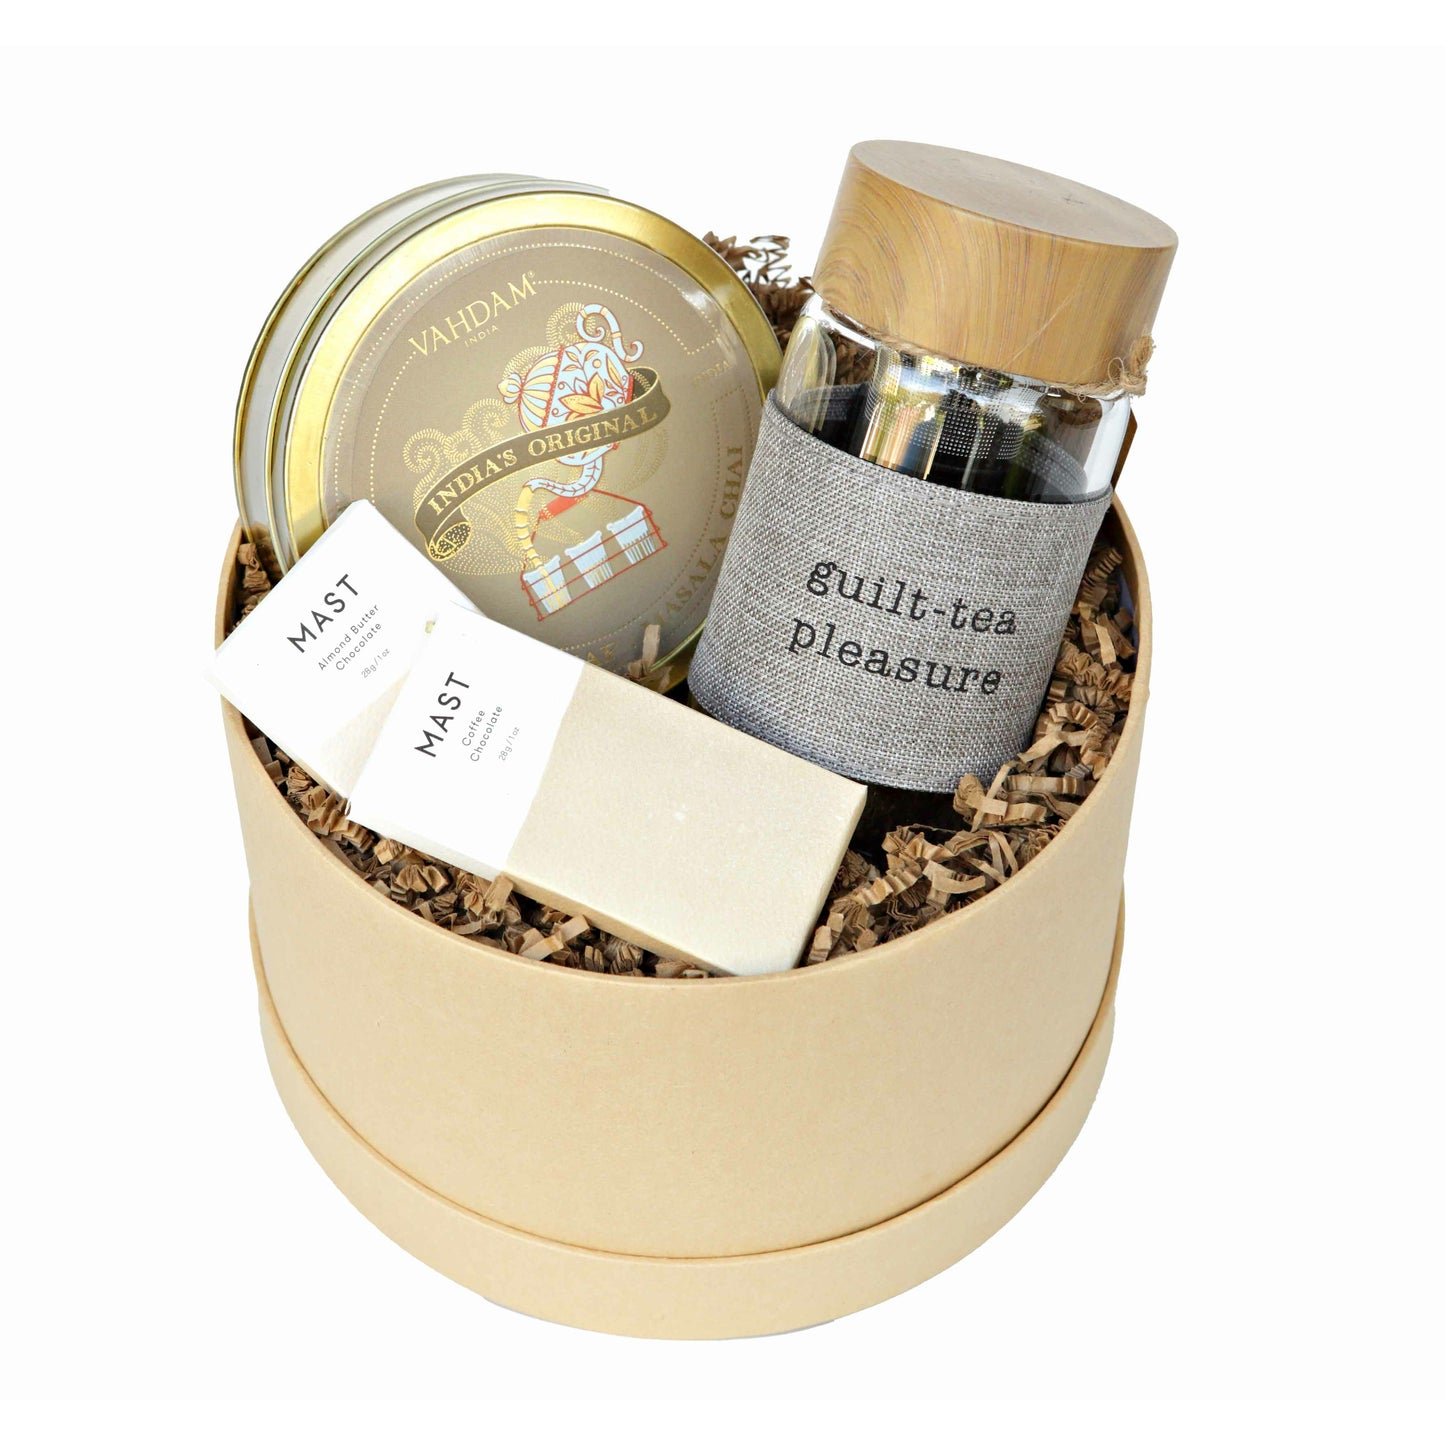 Guilt-tea Pleasure Vahdam Tea Gift Box - DJW Custom Baskets & Beyond